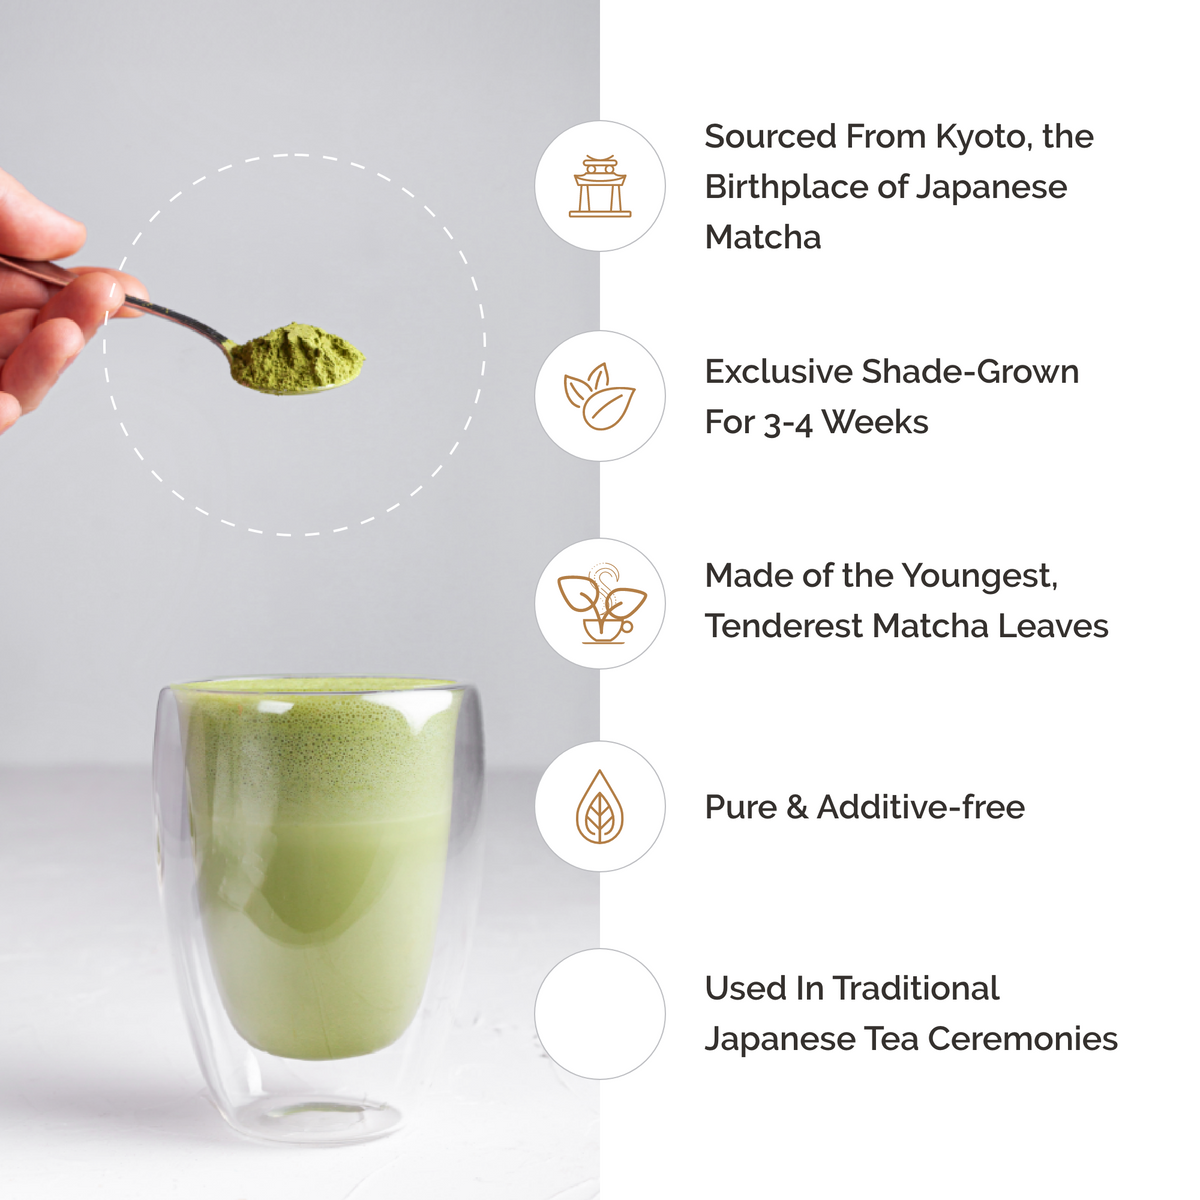 Imperial Matcha Green Tea - 30g Tin | 100% Authentic Japanese Matcha